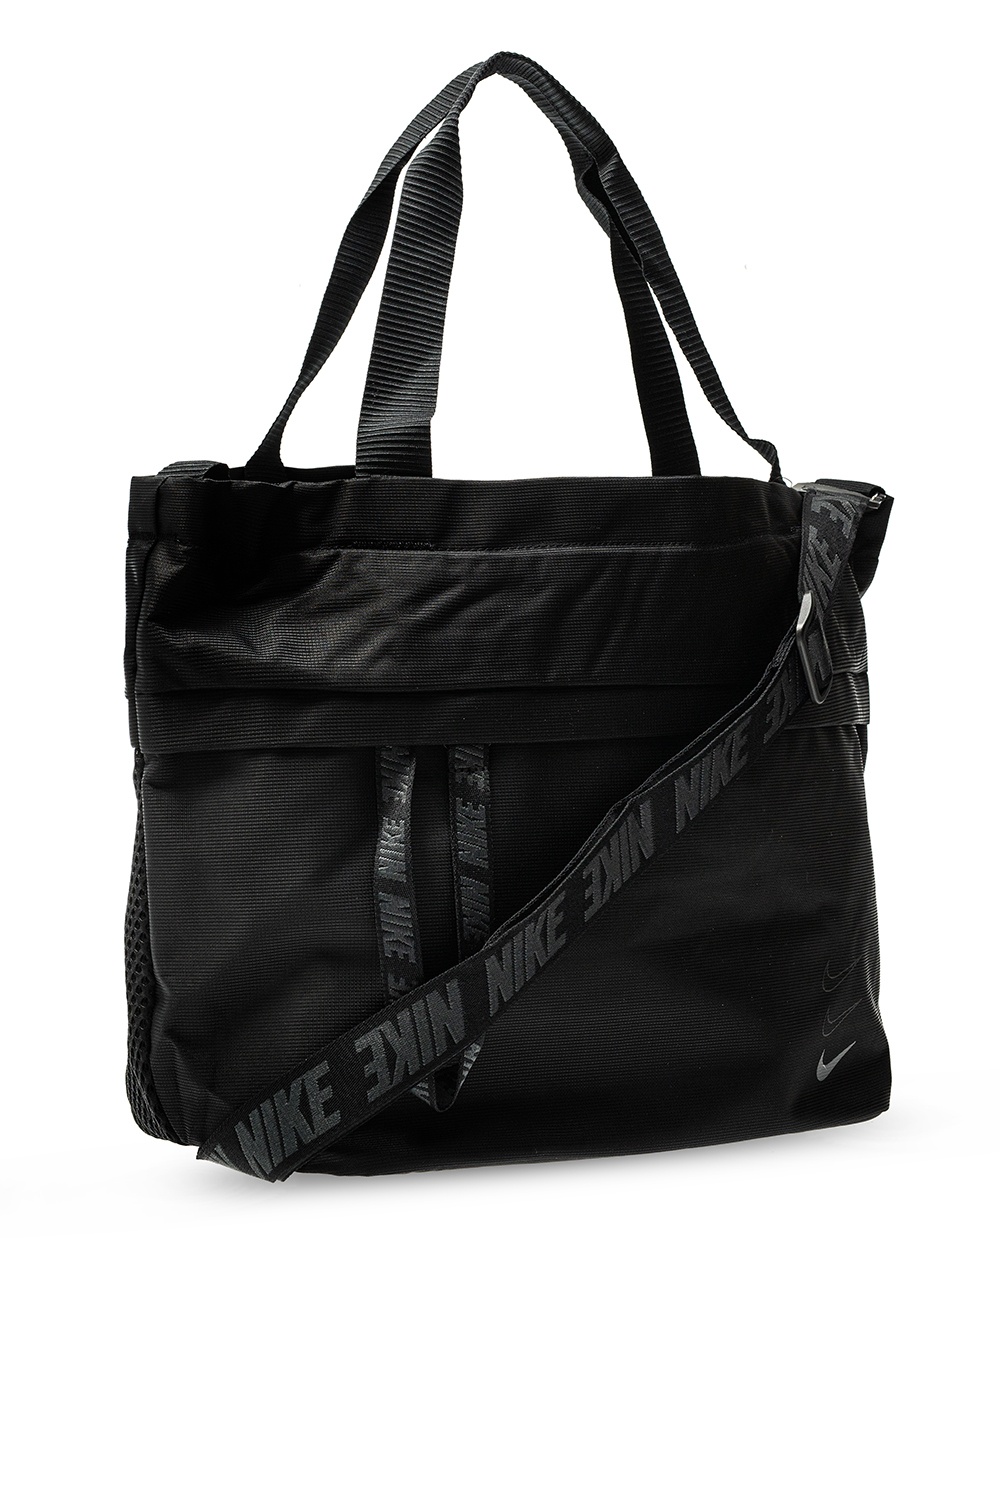 Nike Sport shoulder bag | Women's Bags | Vitkac